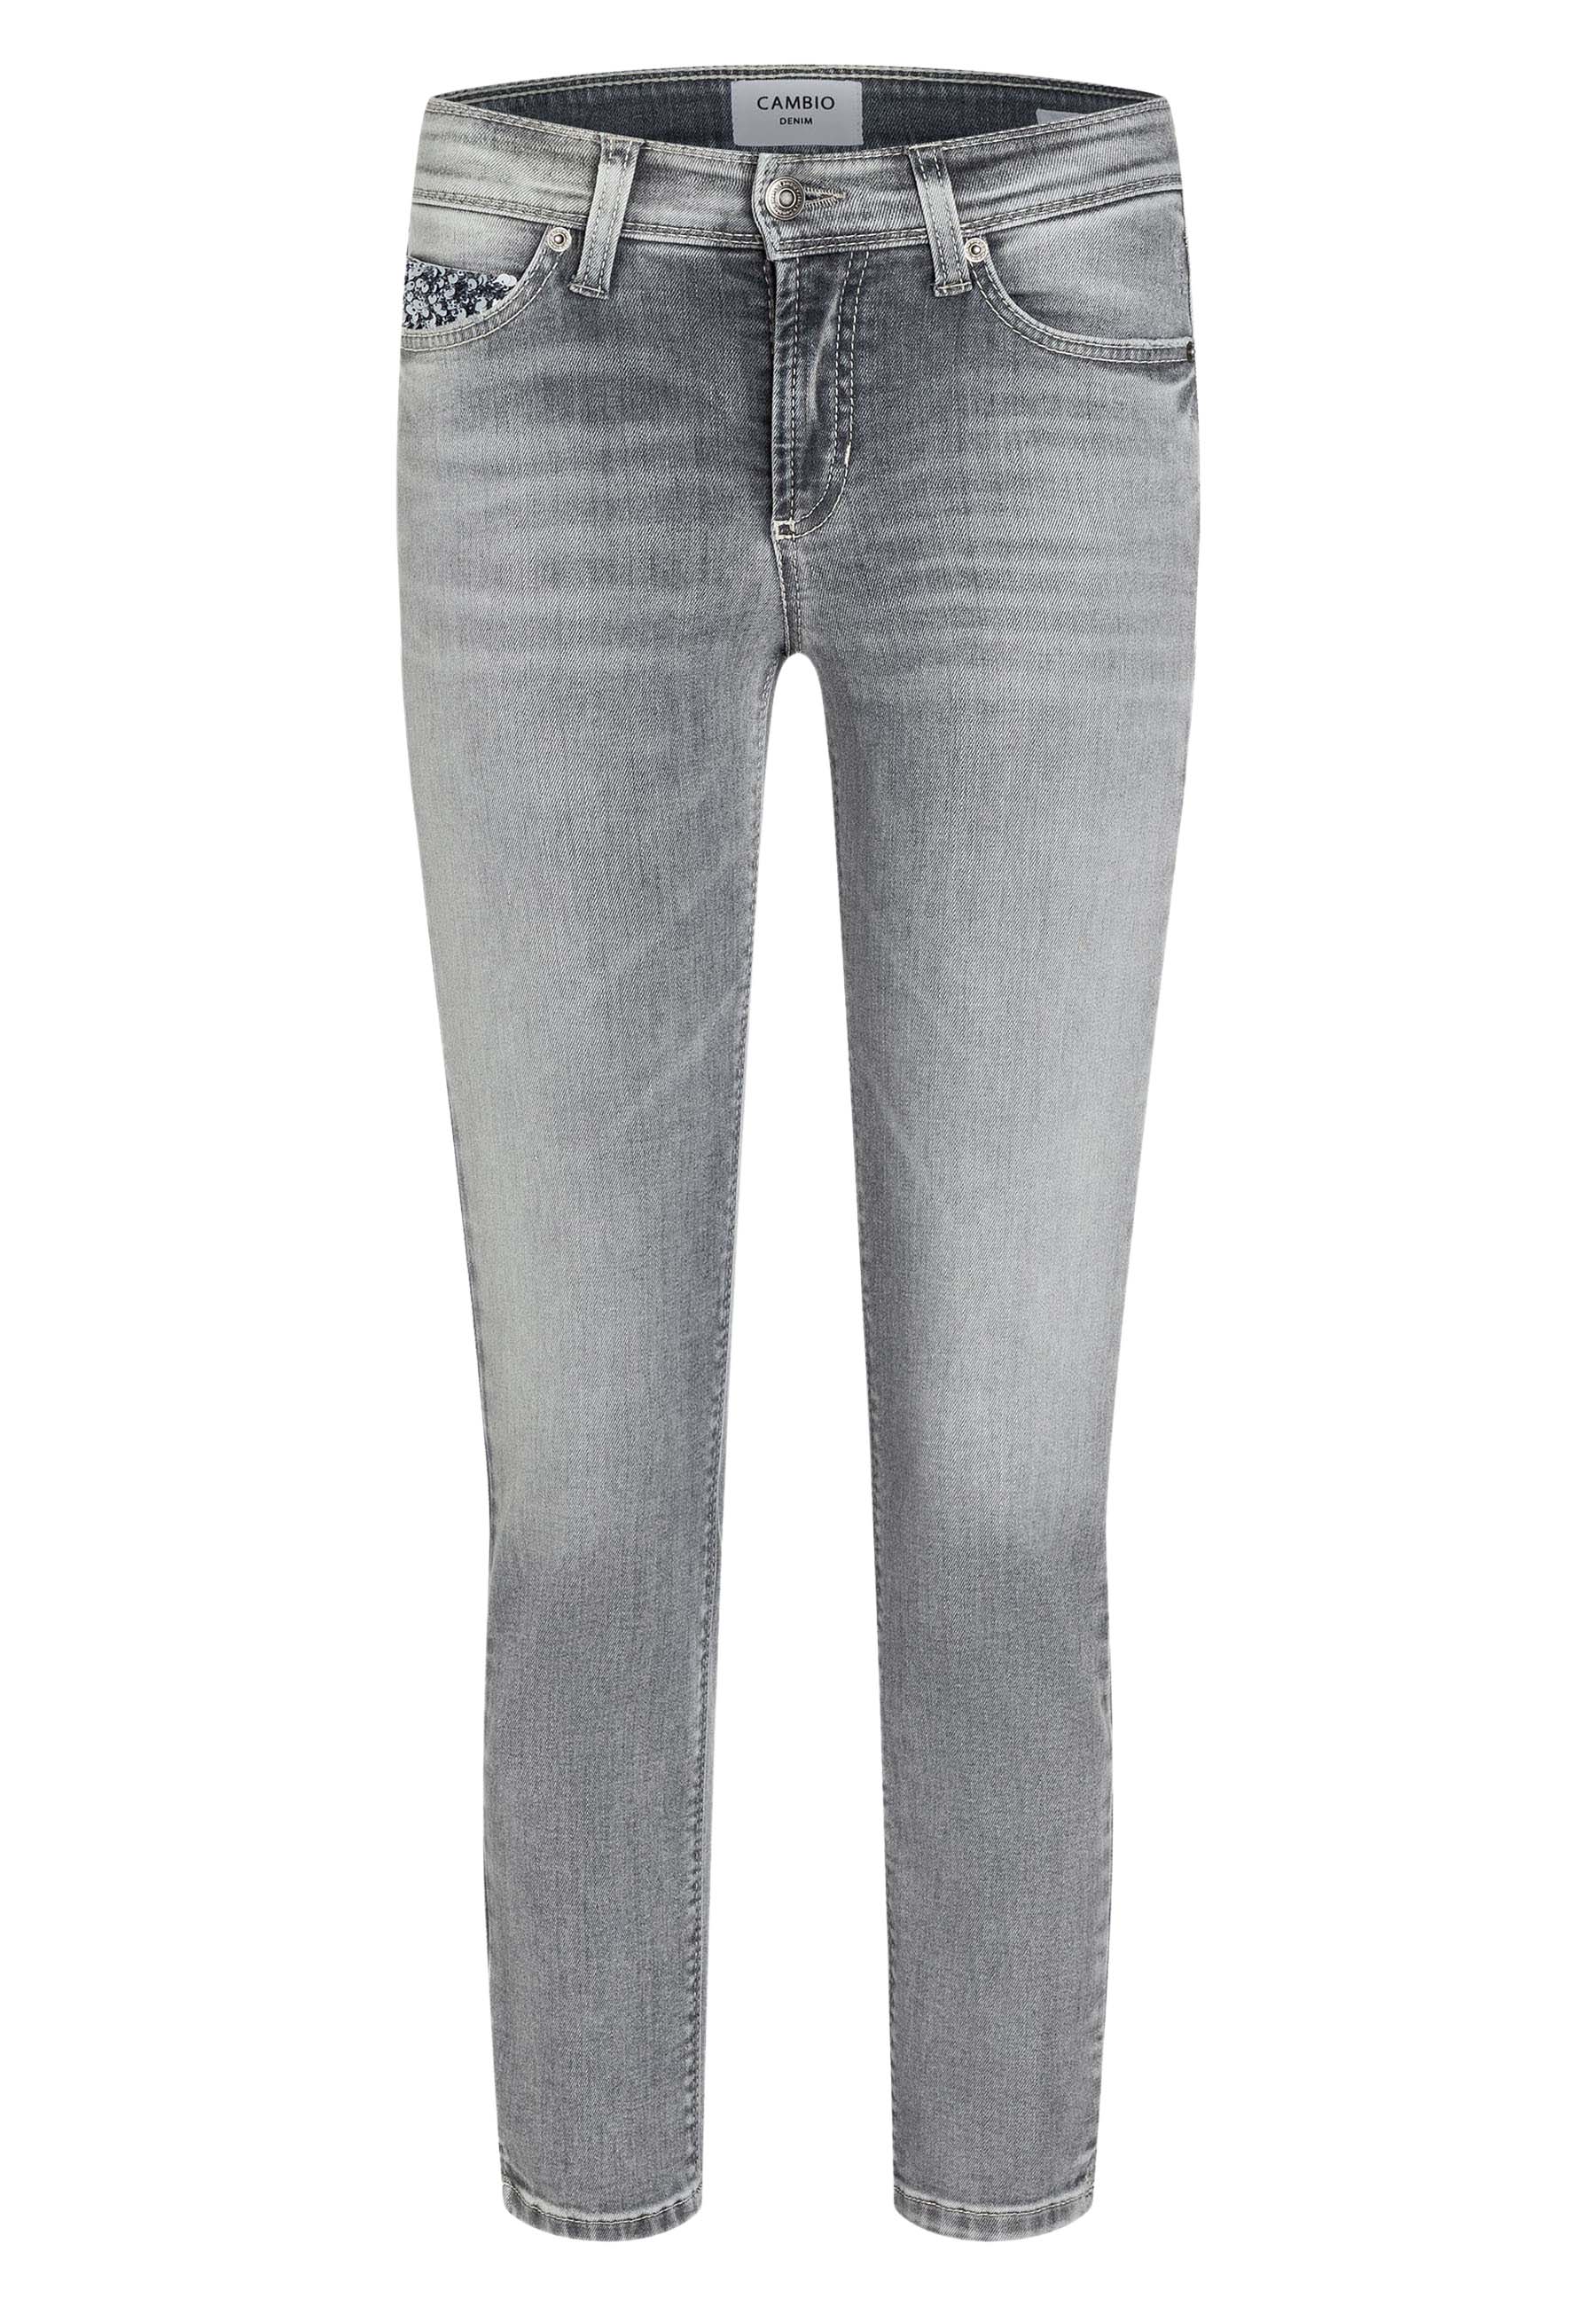 Cambio jeans lichtgrijs Dames maat 42